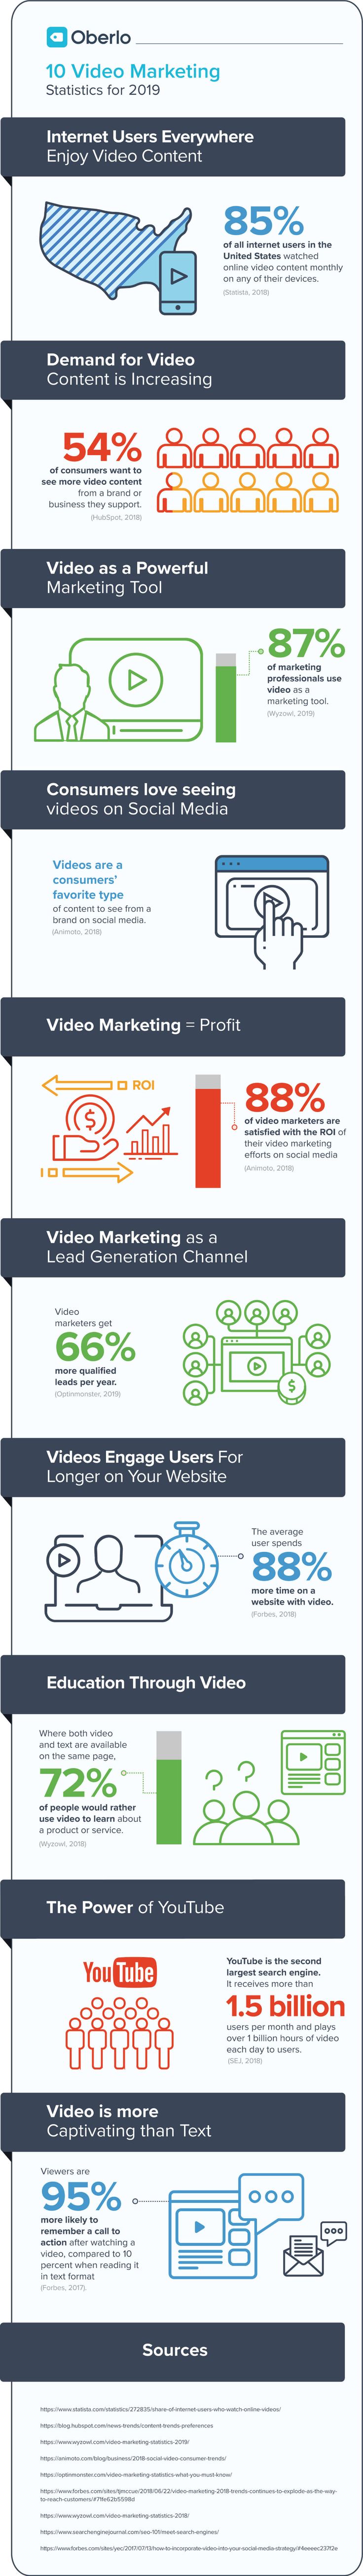 Advertising-Infographics-10-Video-Marketing-Statistics-for-2019-Infographic Advertising Infographics : 10 Video Marketing Statistics for 2019 [Infographic]